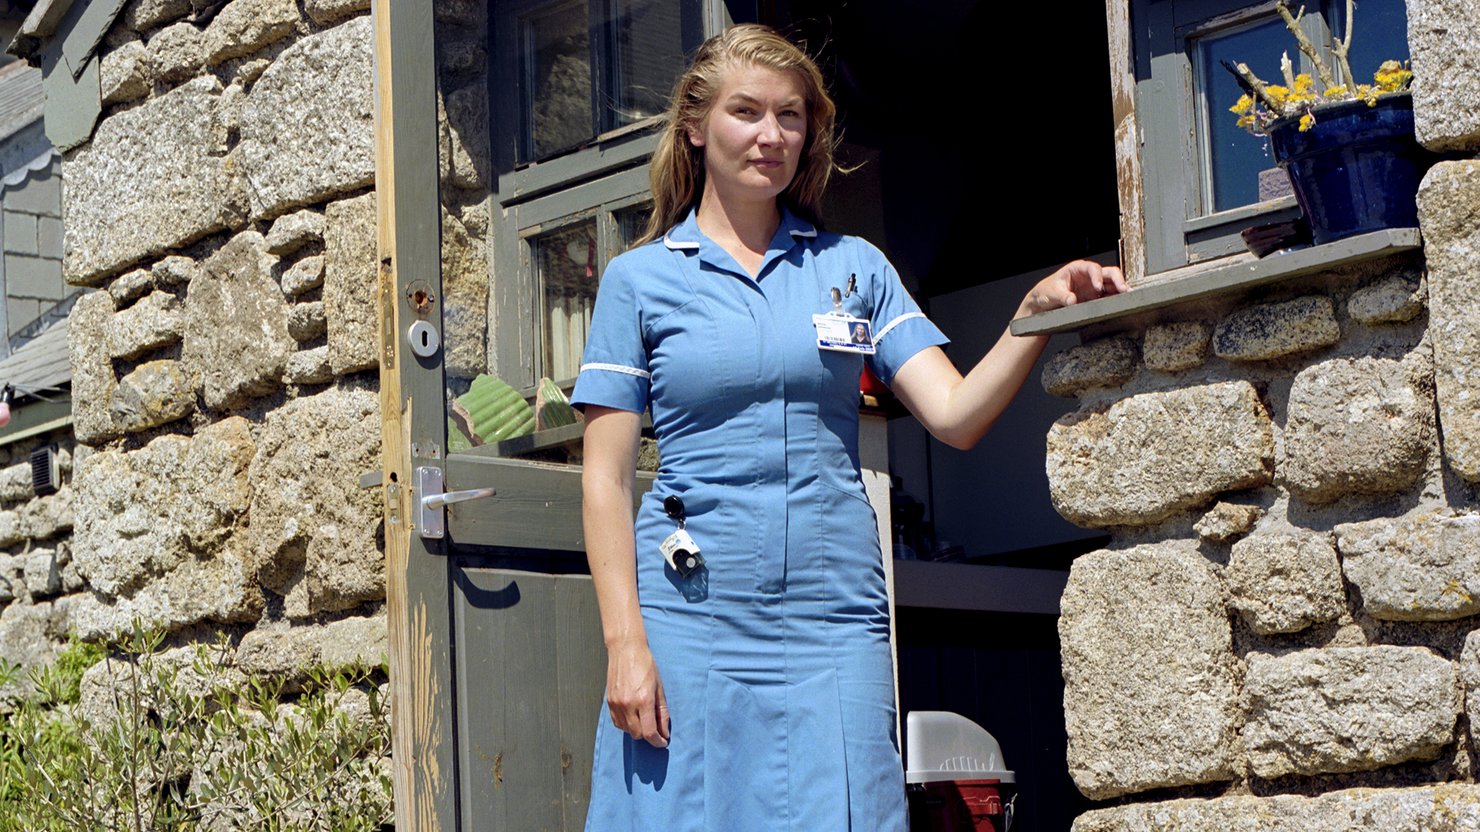 NHS Nurse Bridie image by Becky Tyrrell